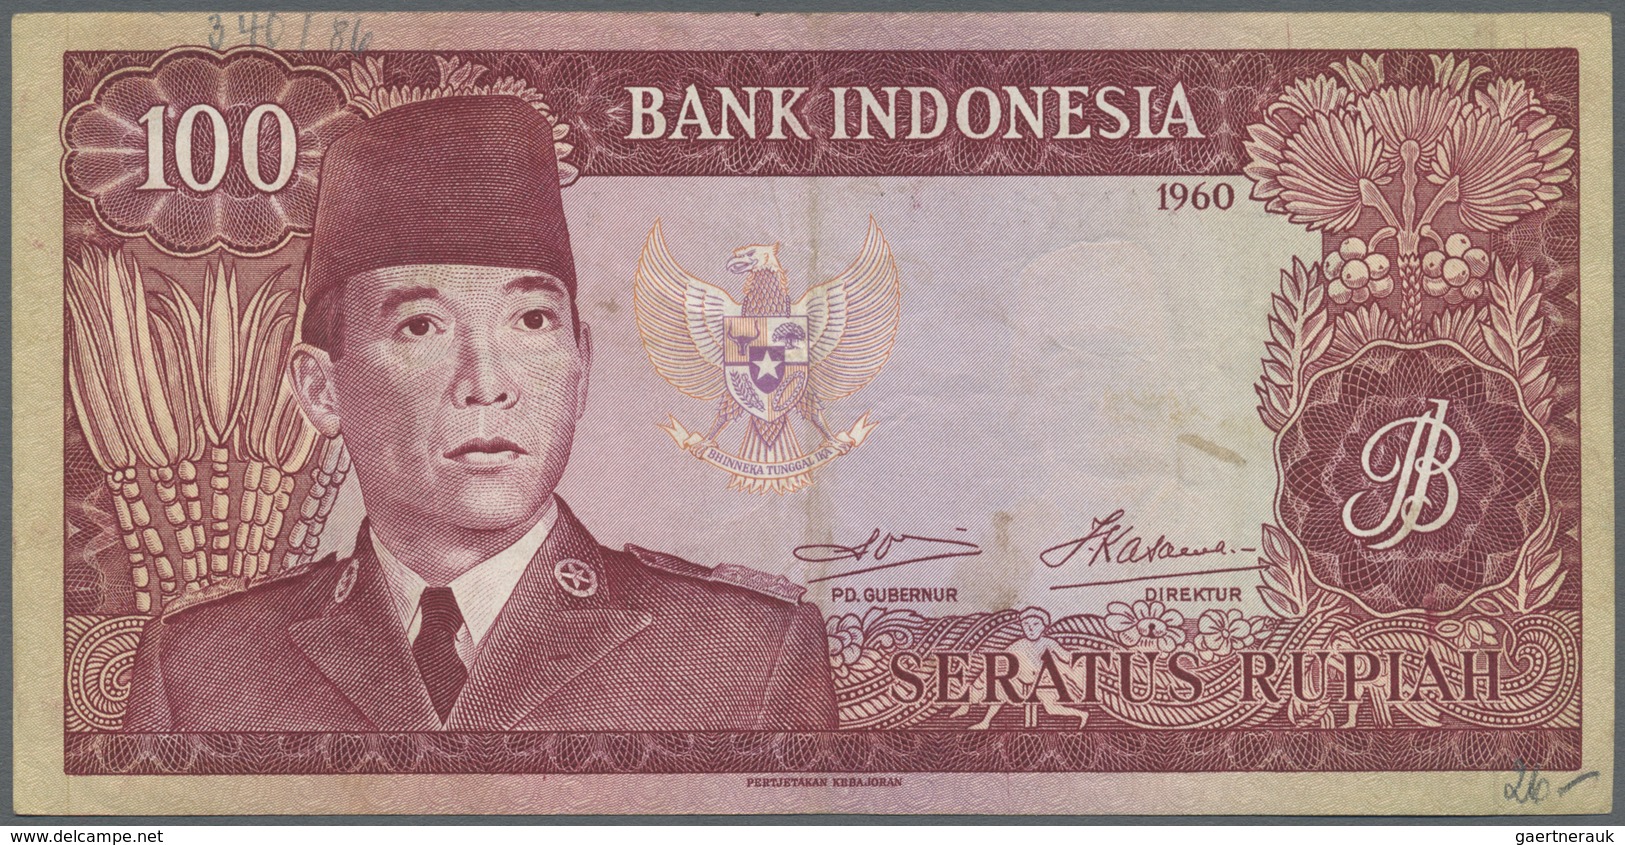 Indonesia / Indonesien: 100 Rupiah 1960, P.86a, Printer Pertjetakan Kebajoran, Lightly Stained Paper - Indonesia